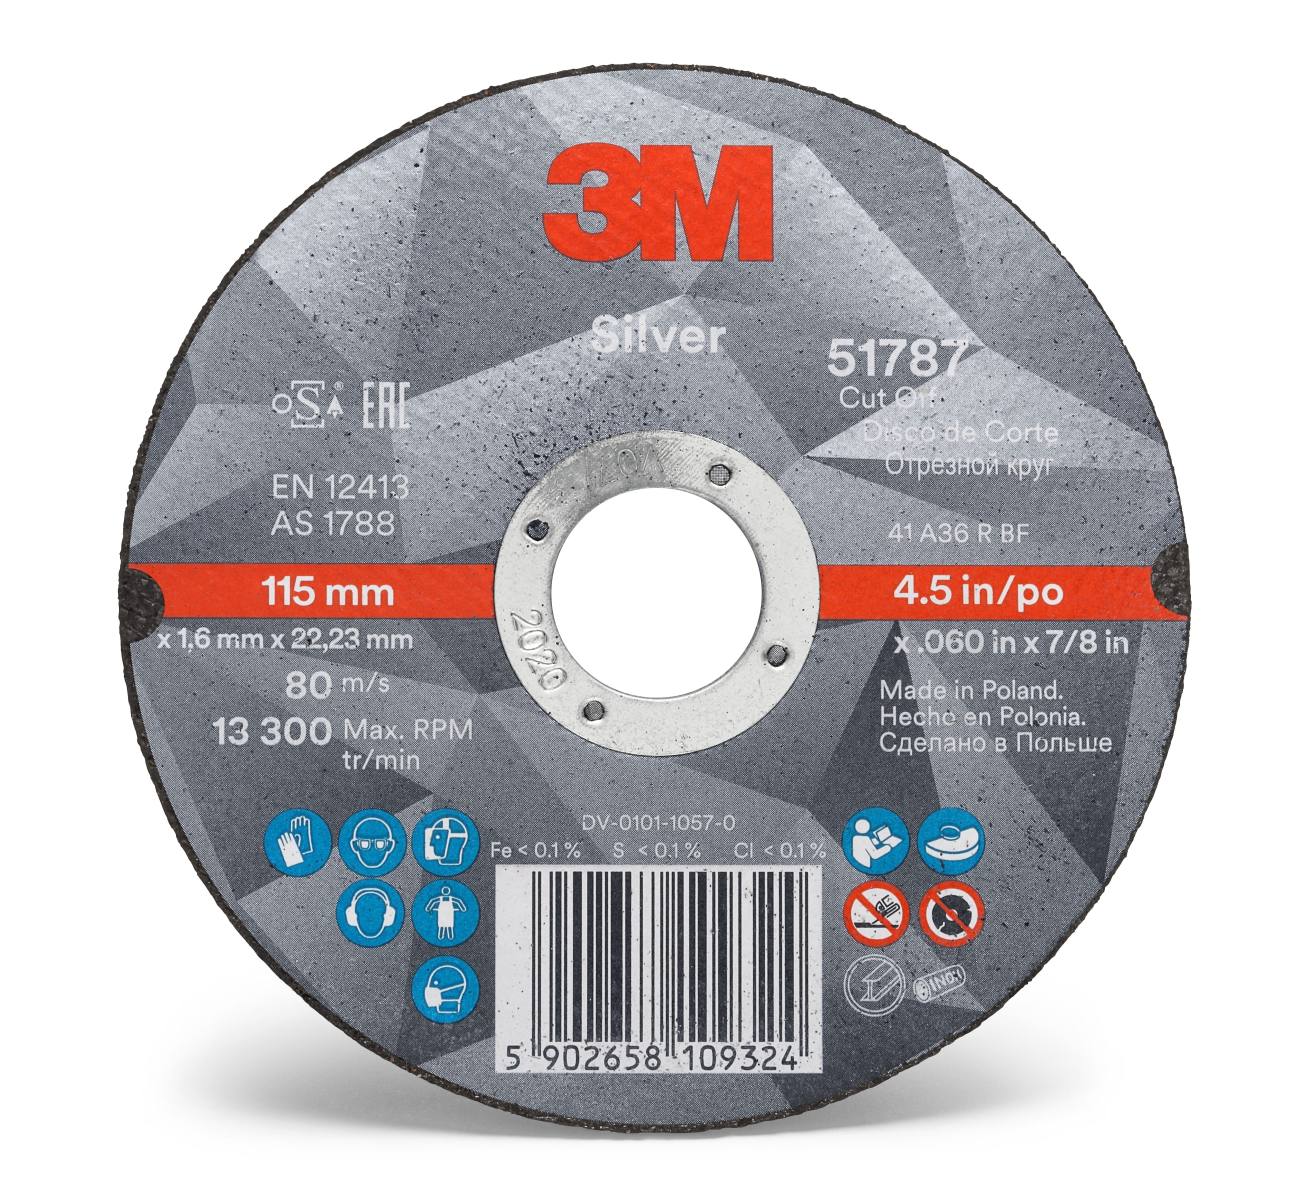 3M Silver Cut-Off Wheel Trennscheibe, 125 mm, 1,6 mm, 22,23 mm, T41, 51792